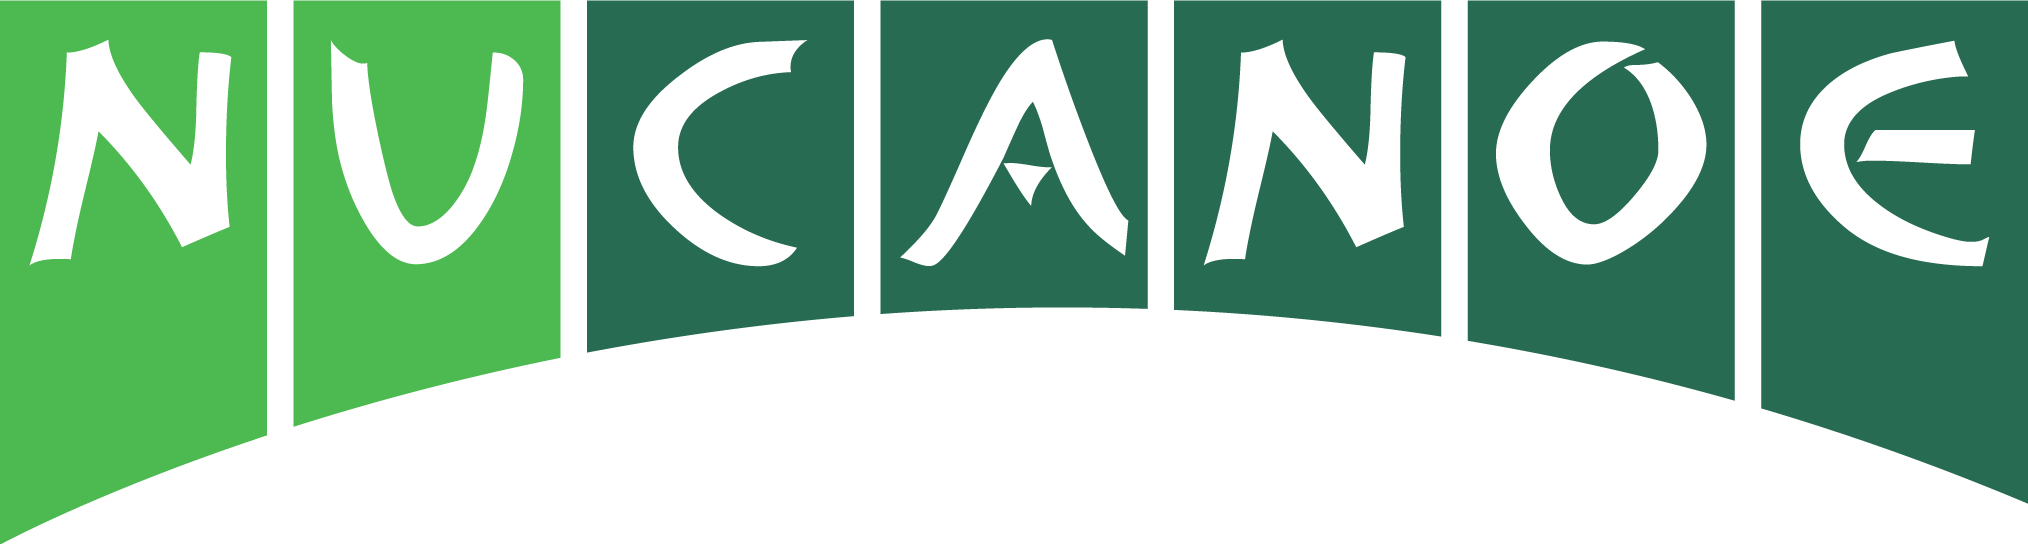 NuCanoe-Logo-Green-Large.png